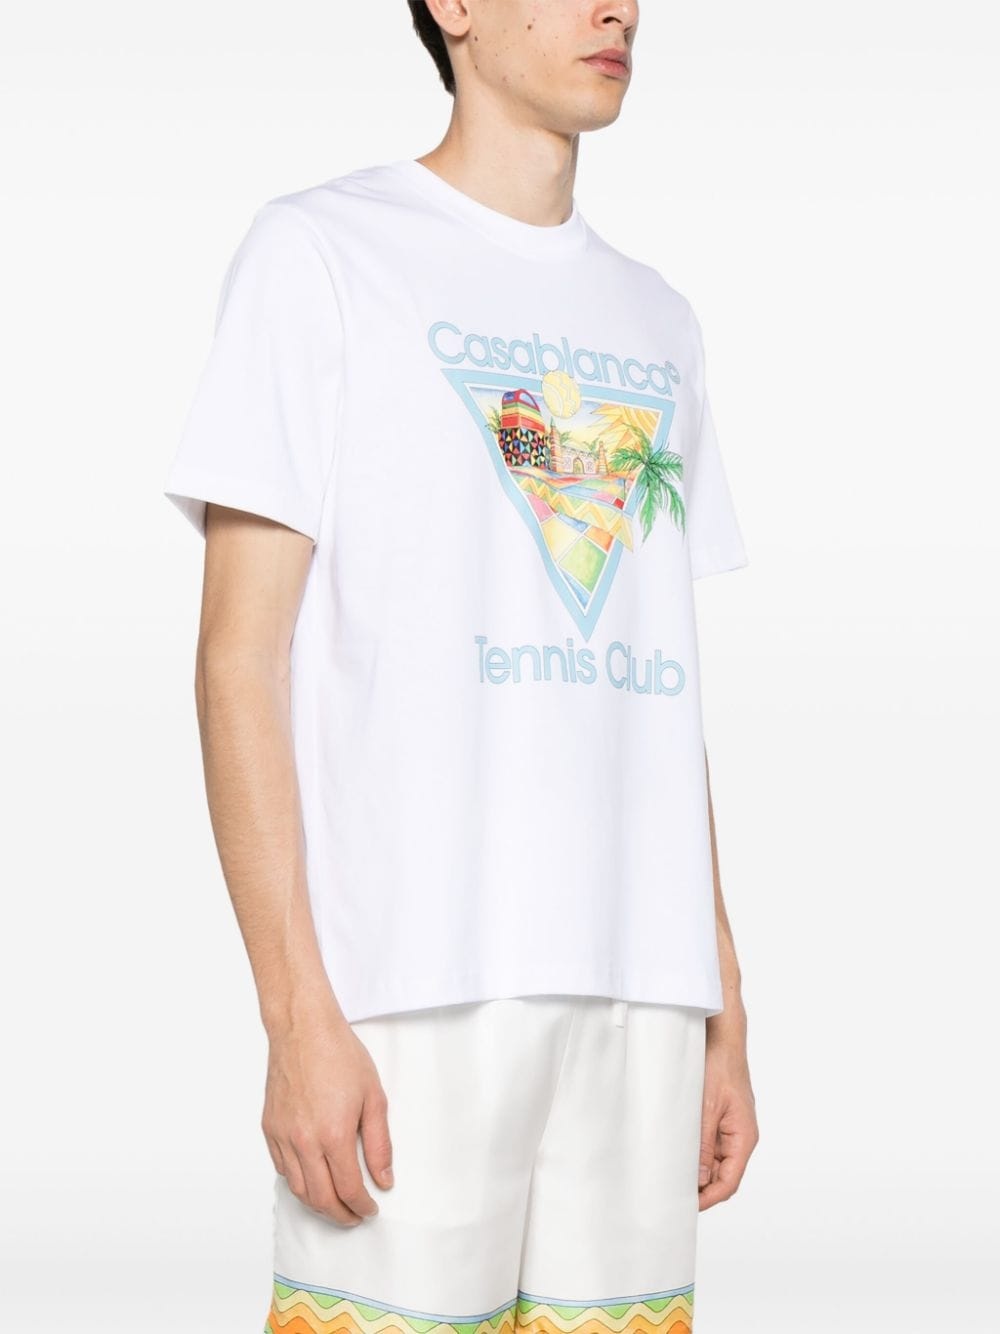 Afro Cubism Tennis Club cotton T-shirt - 3